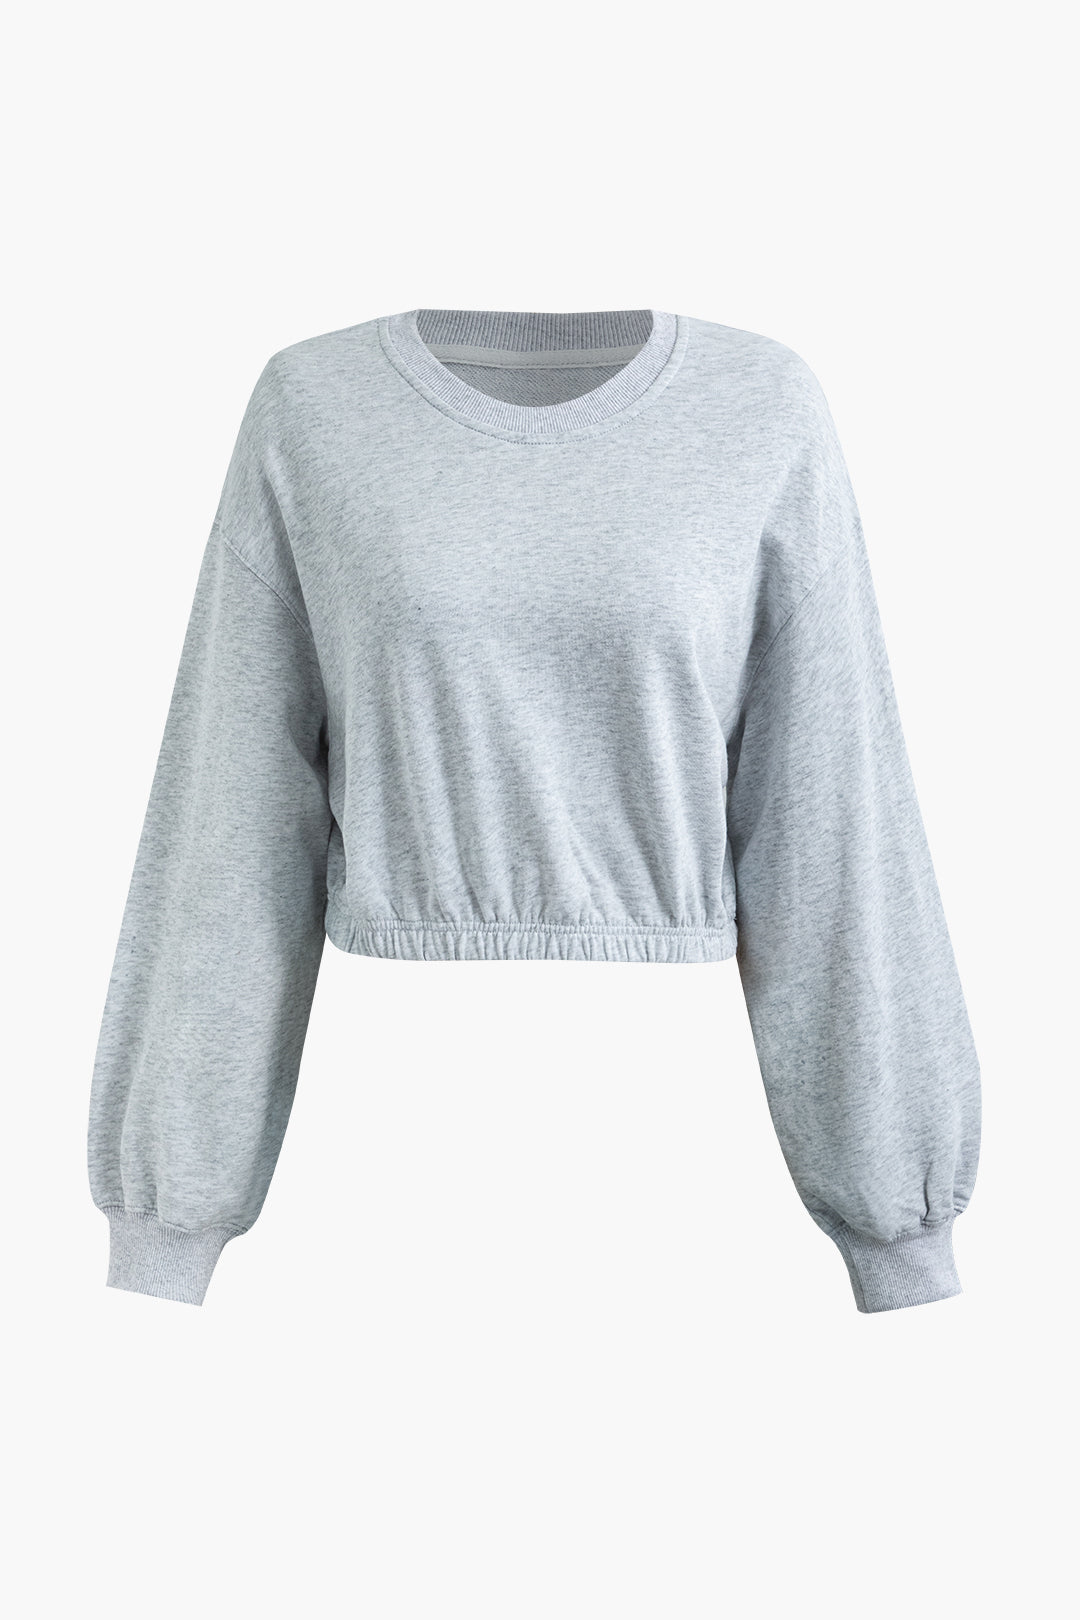 Basic Solid Round Neck Elastic Hem Crop Sweatshirt